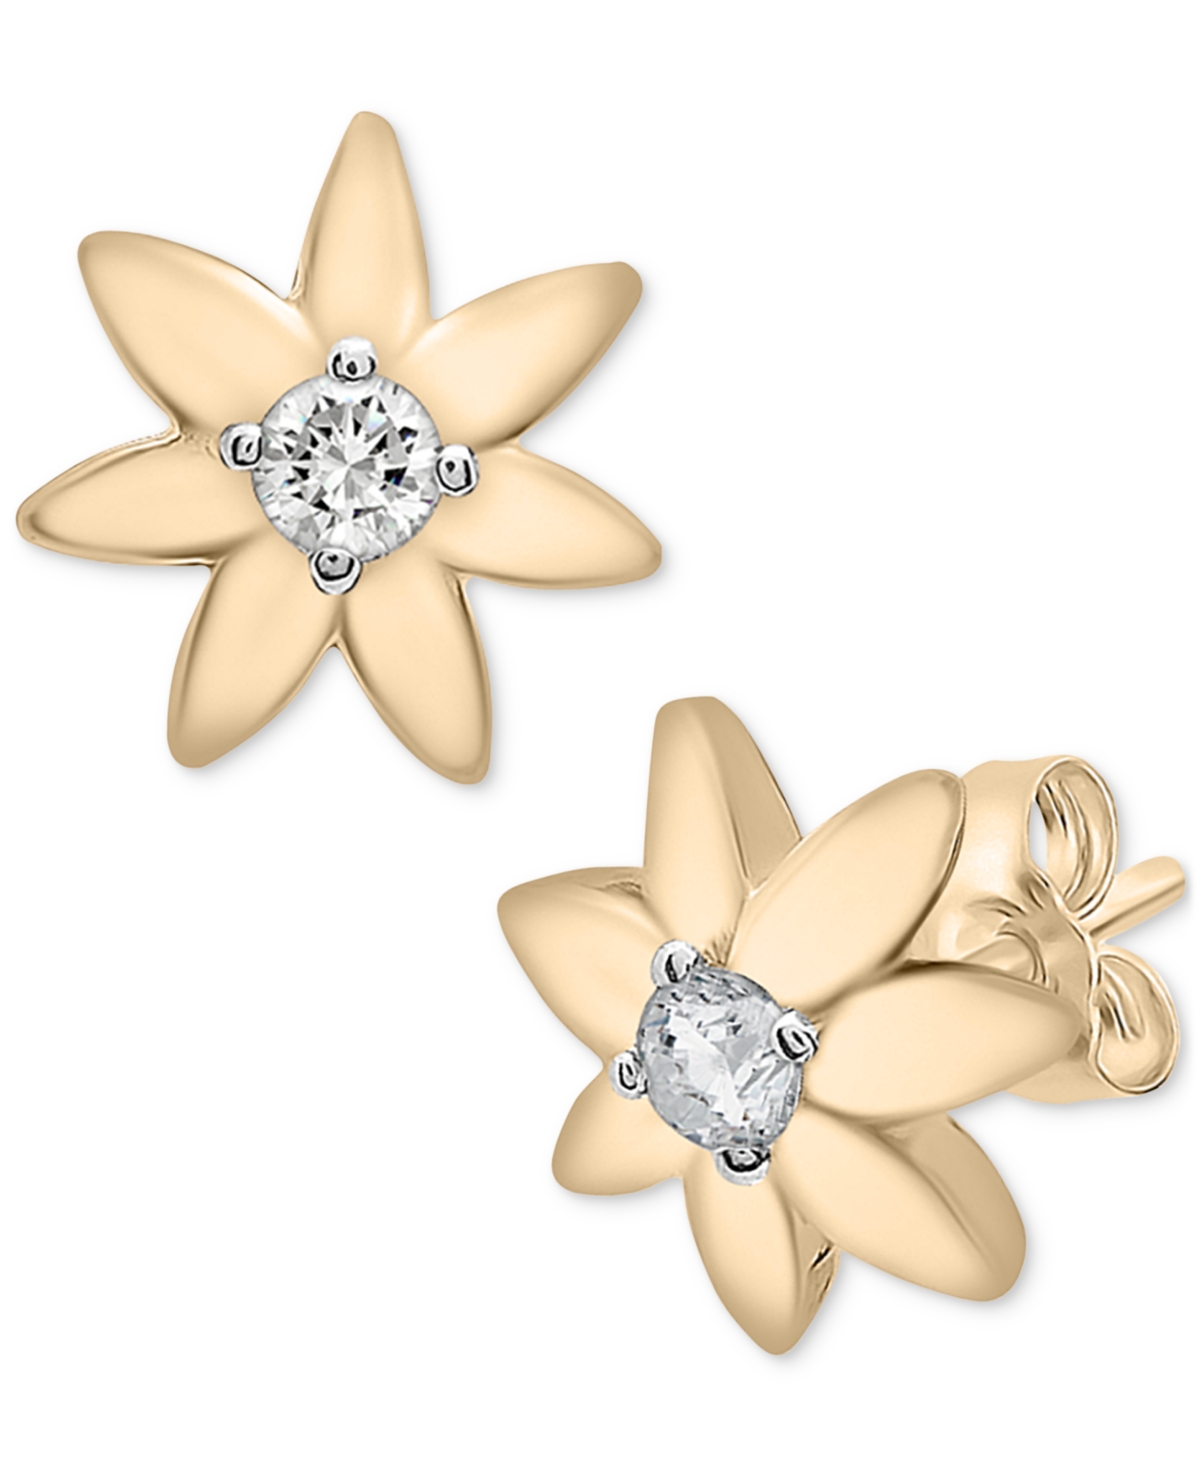 Diamond Flower Stud Earrings (1/10 ct. t.w.) in Gold Vermeil, Created for Macy's - Gold Vermeil